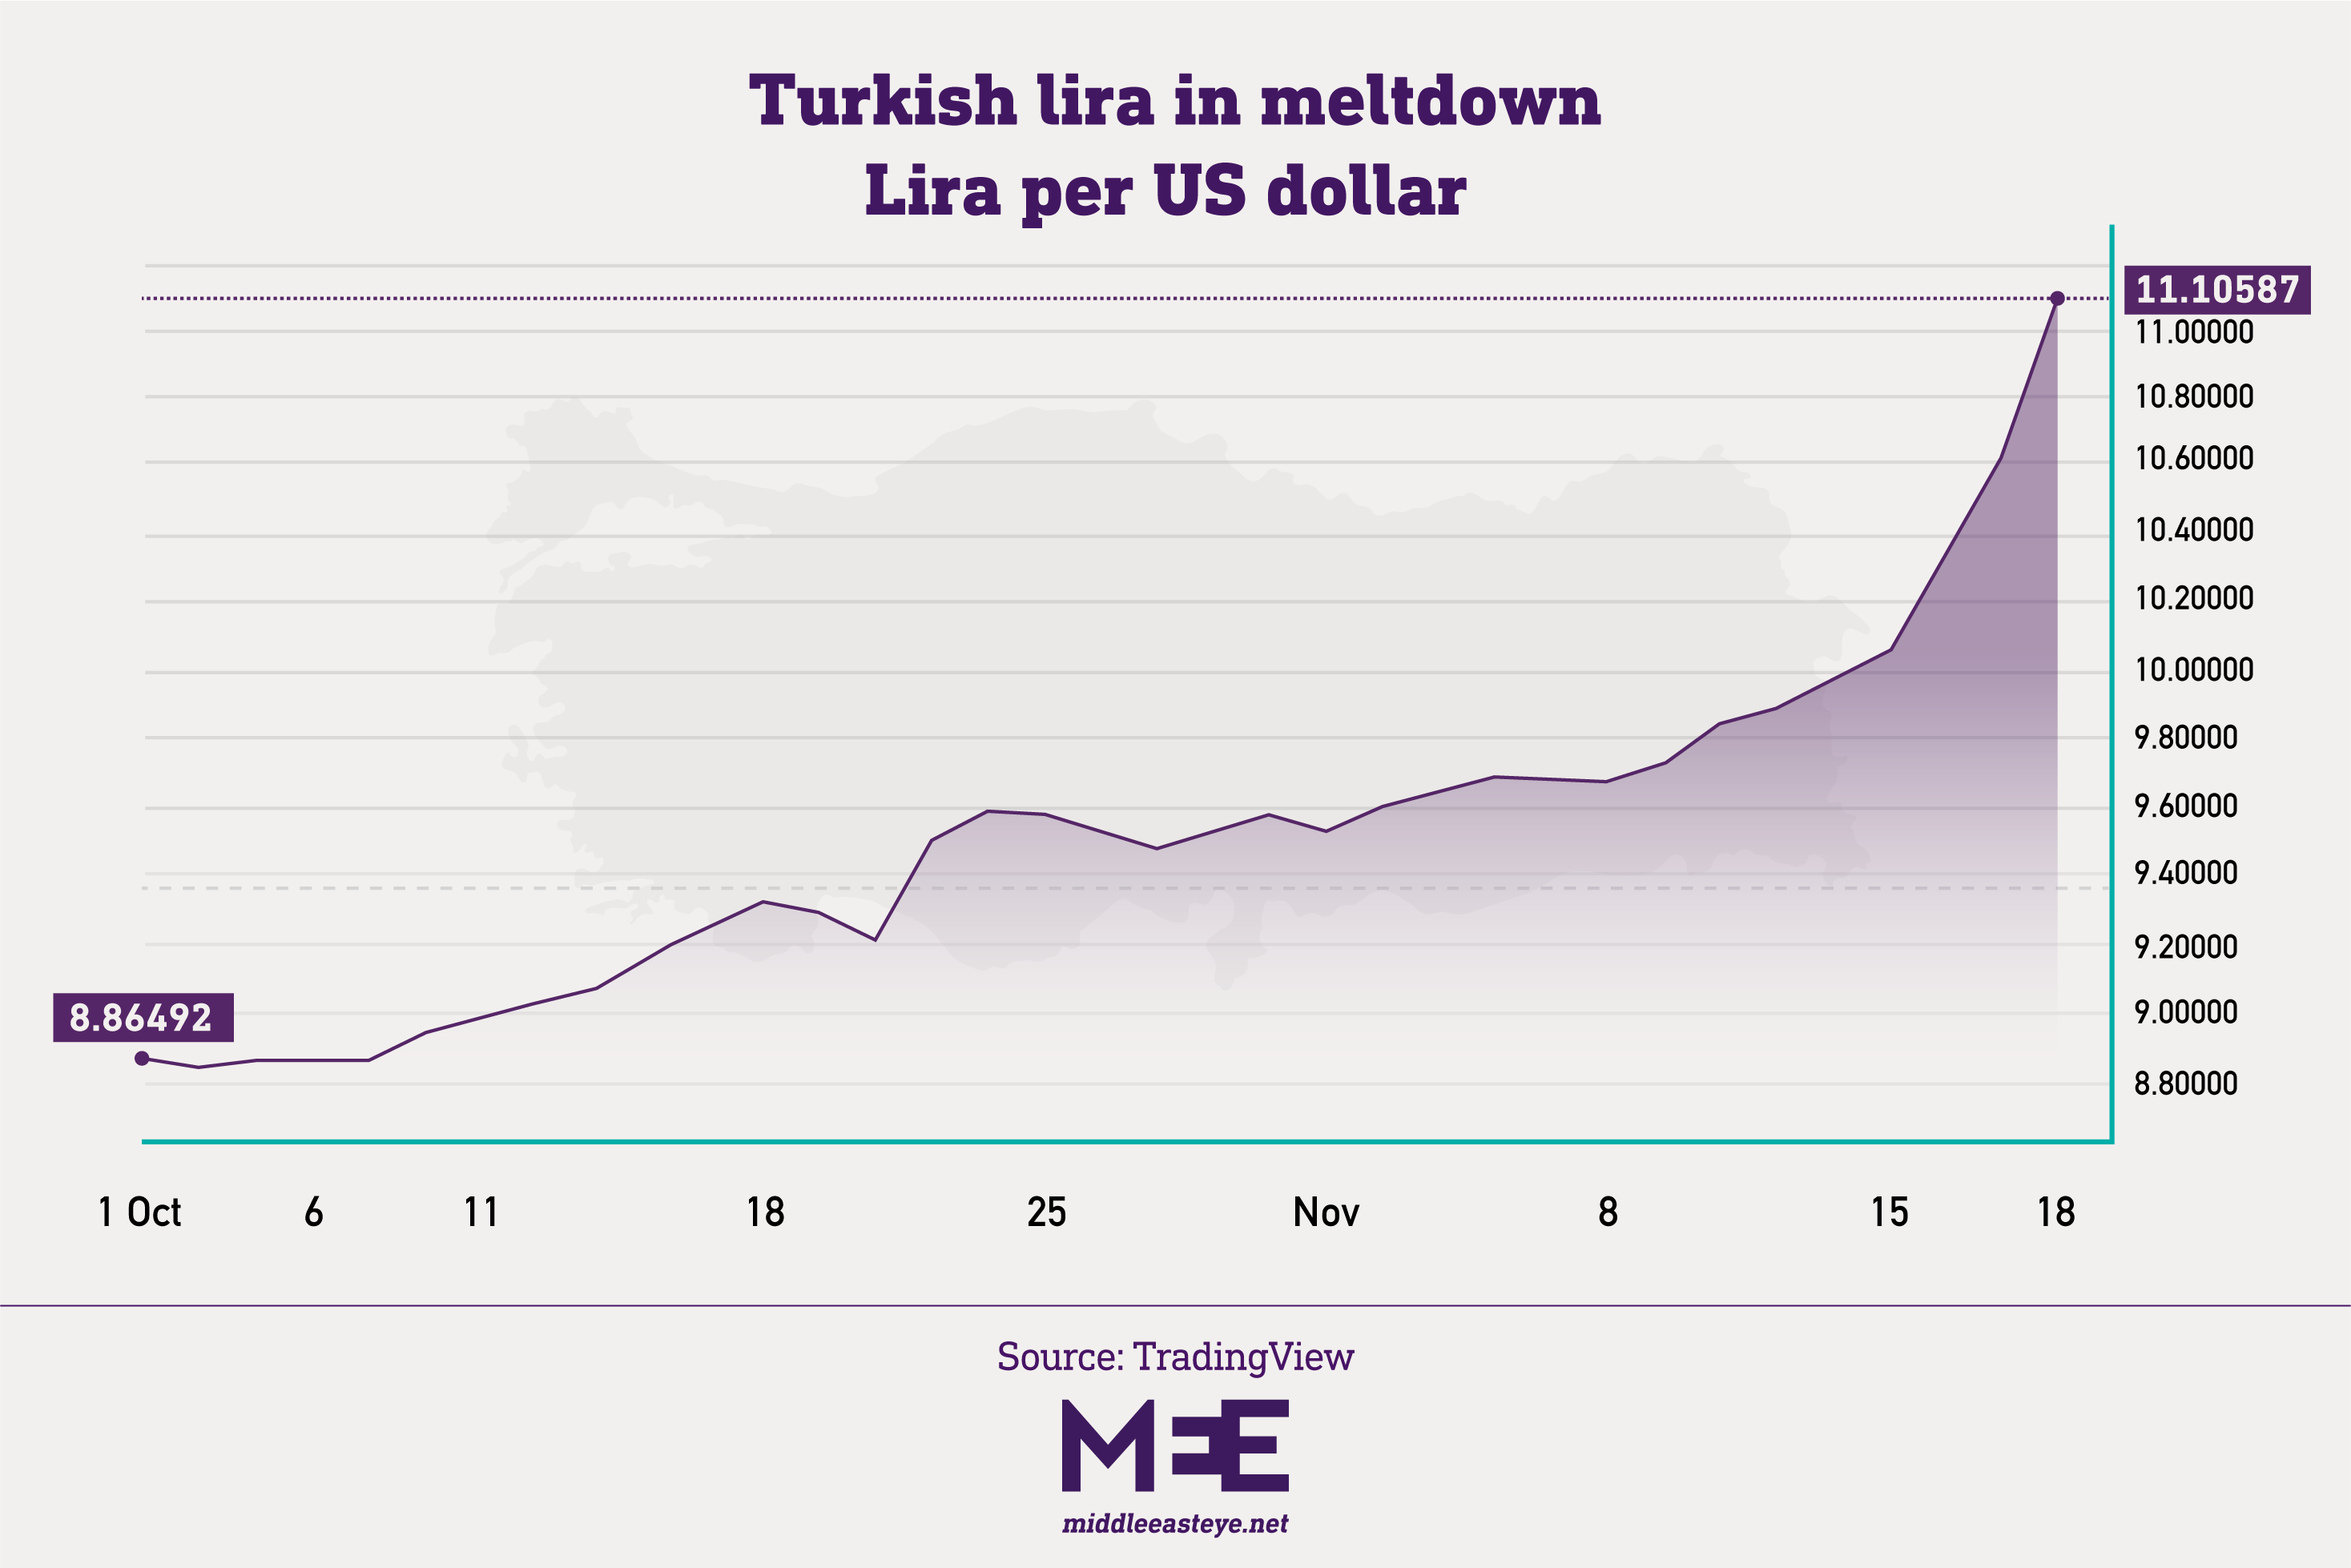 Turkish lira in meltdown